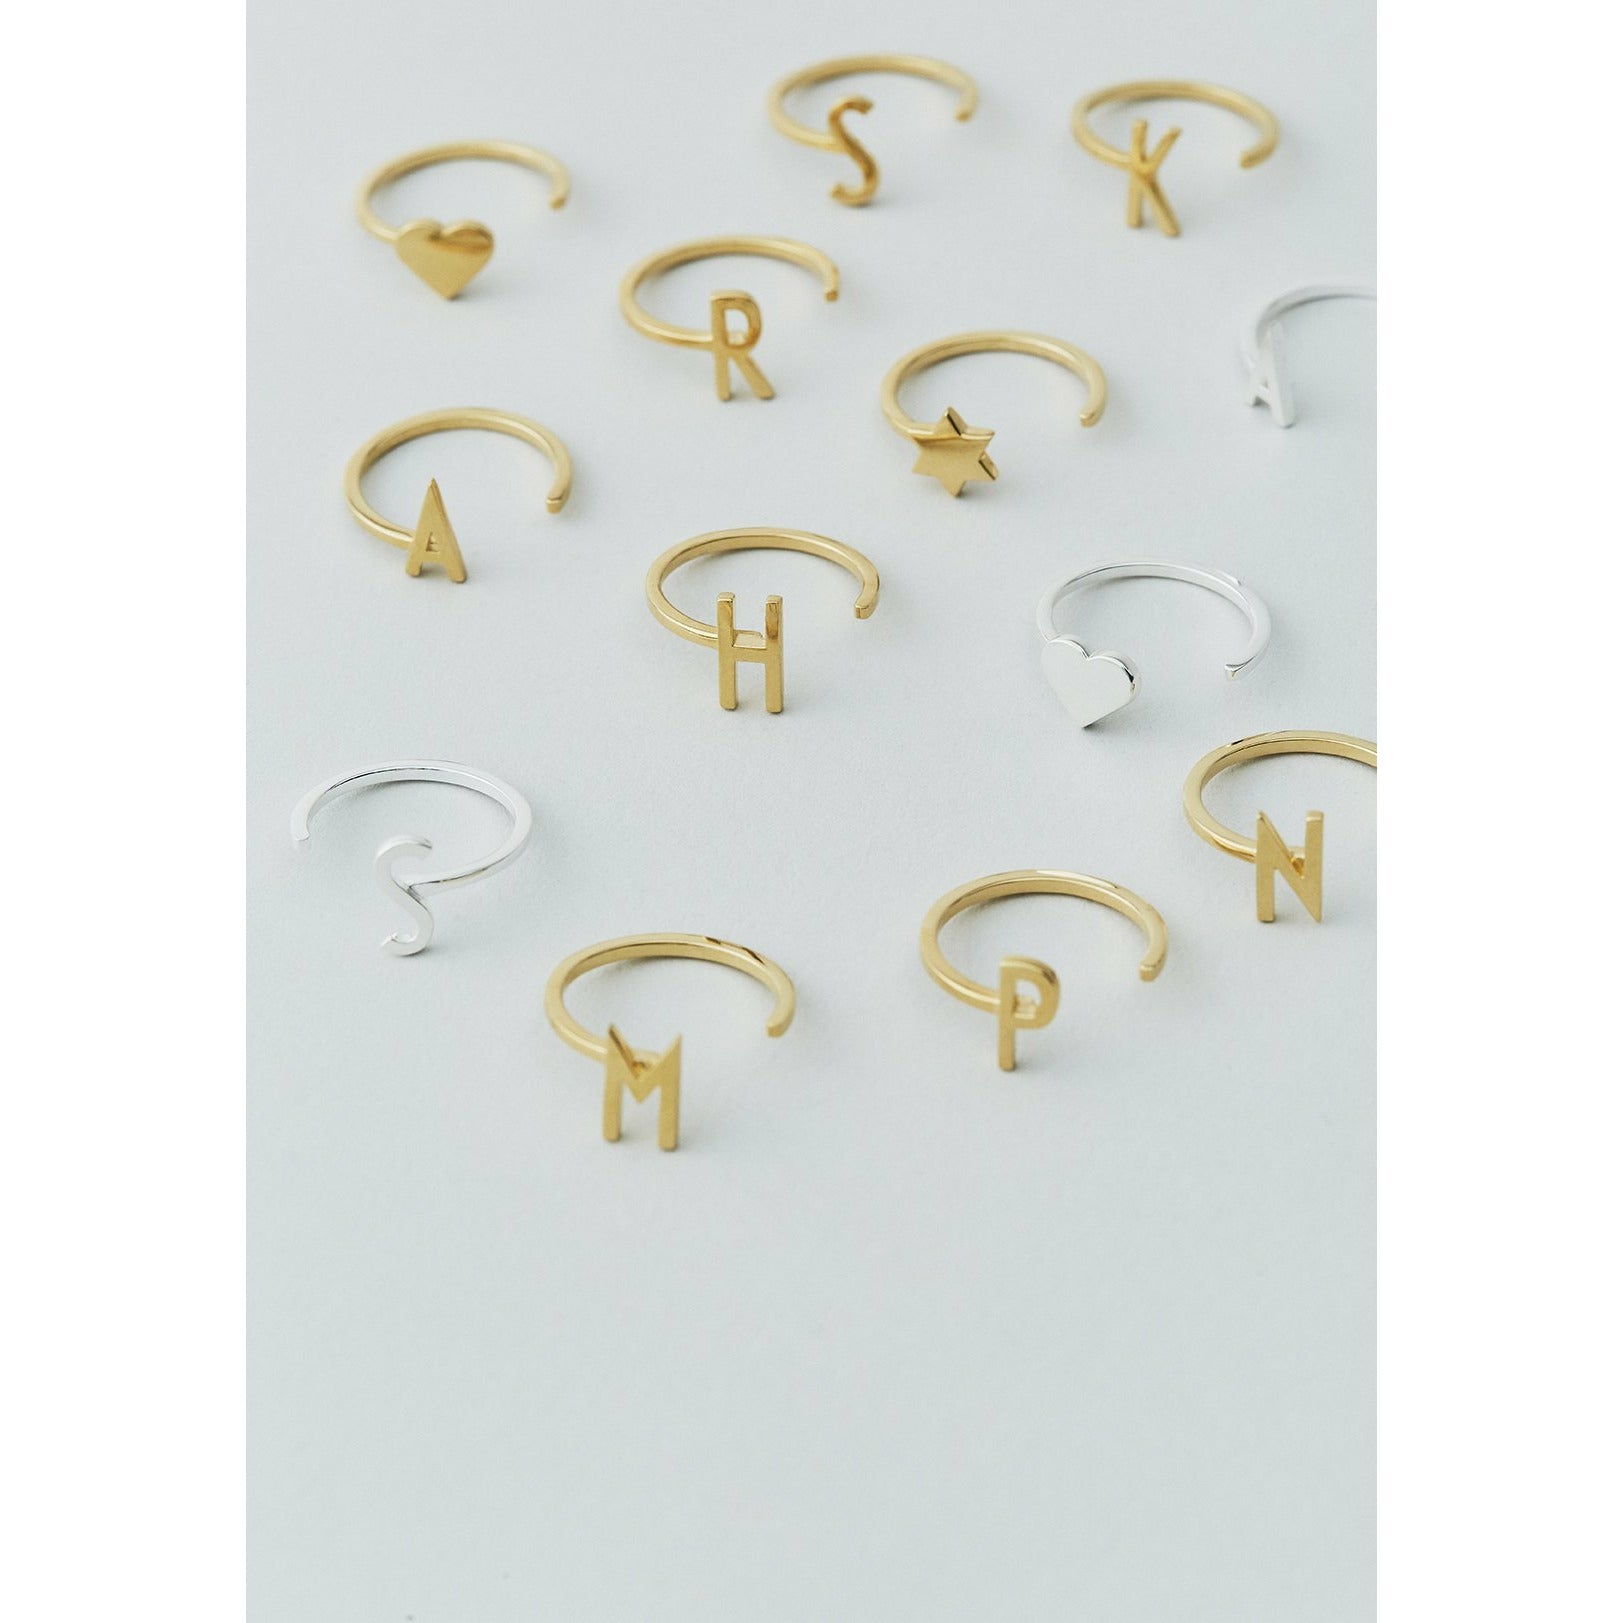 Letras de diseño anillo de letras a z, 18k dorado chapado, z